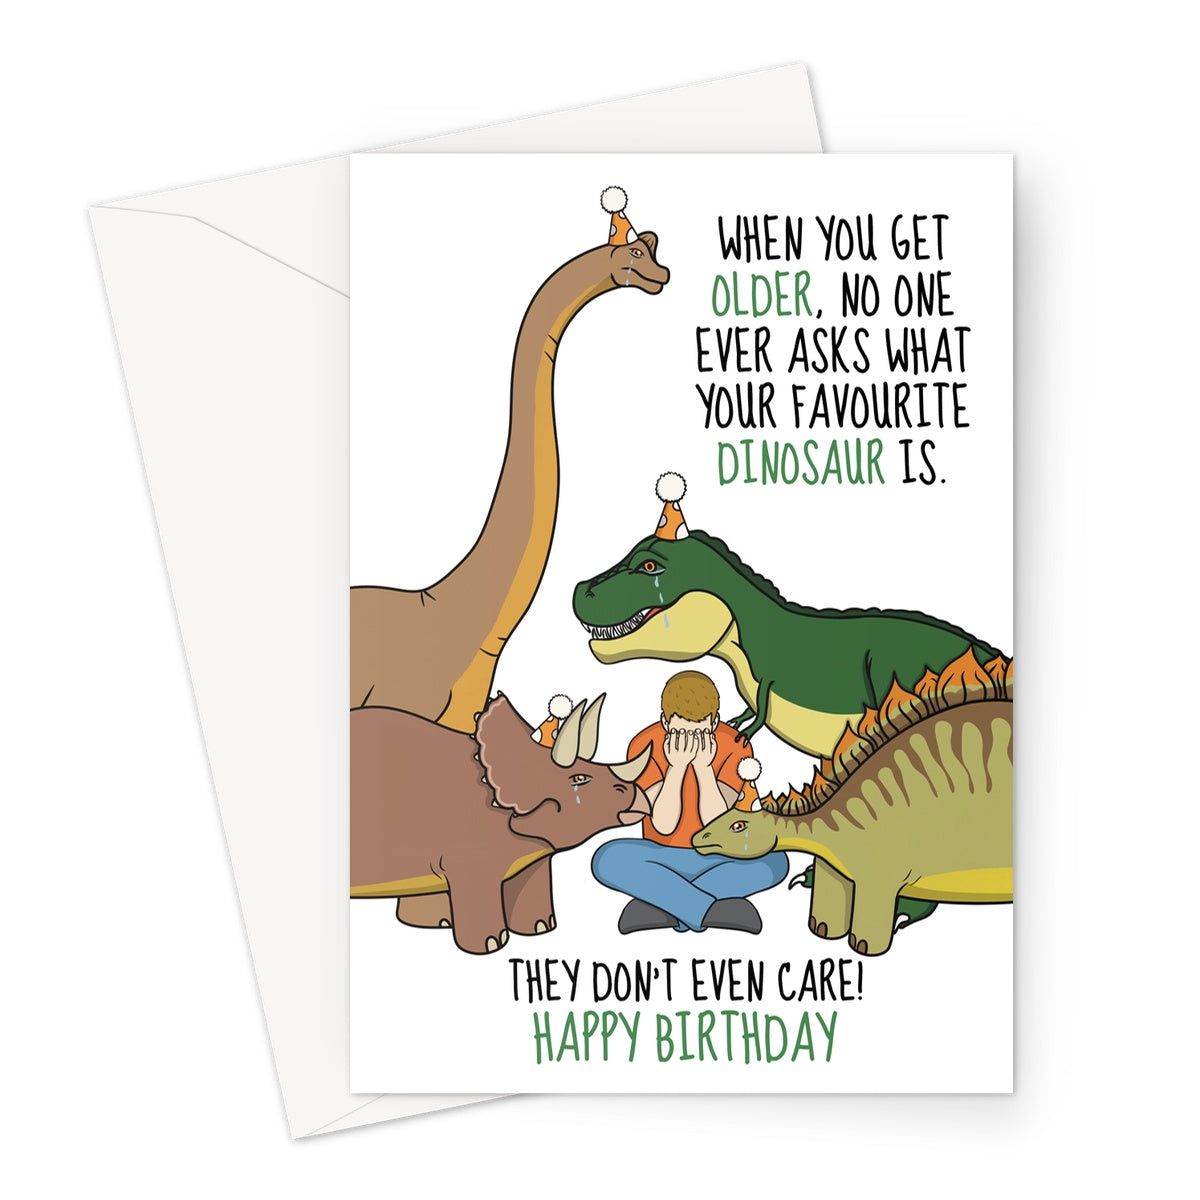 Funny Dinosaur Birthday Card For Adults